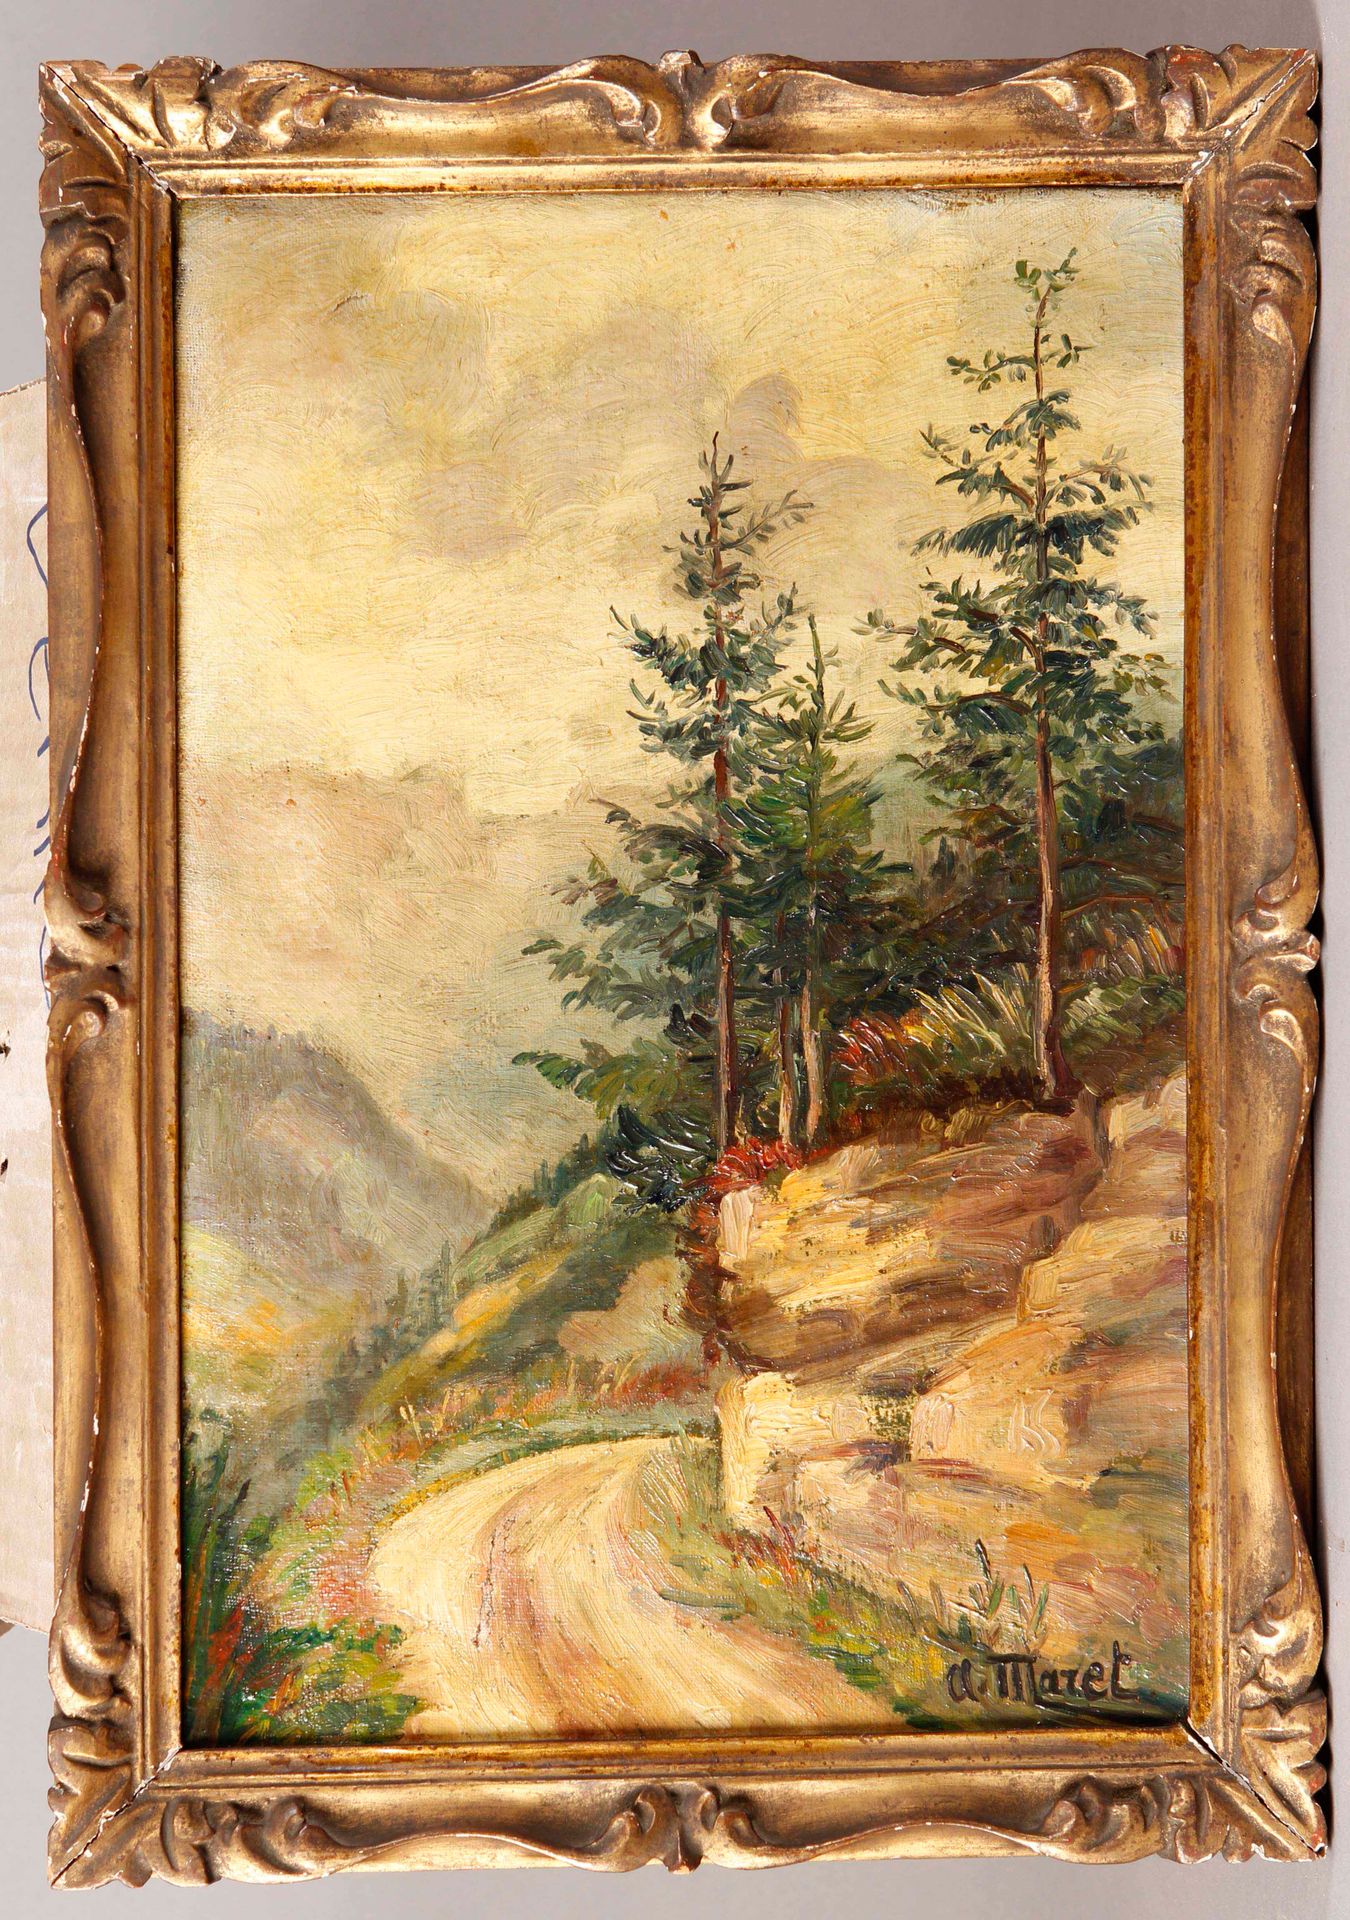 Null A.MARET (siglo XX)
Carretera de montaña
Óleo sobre lienzo.
41 x 27,5 cm
Peq&hellip;